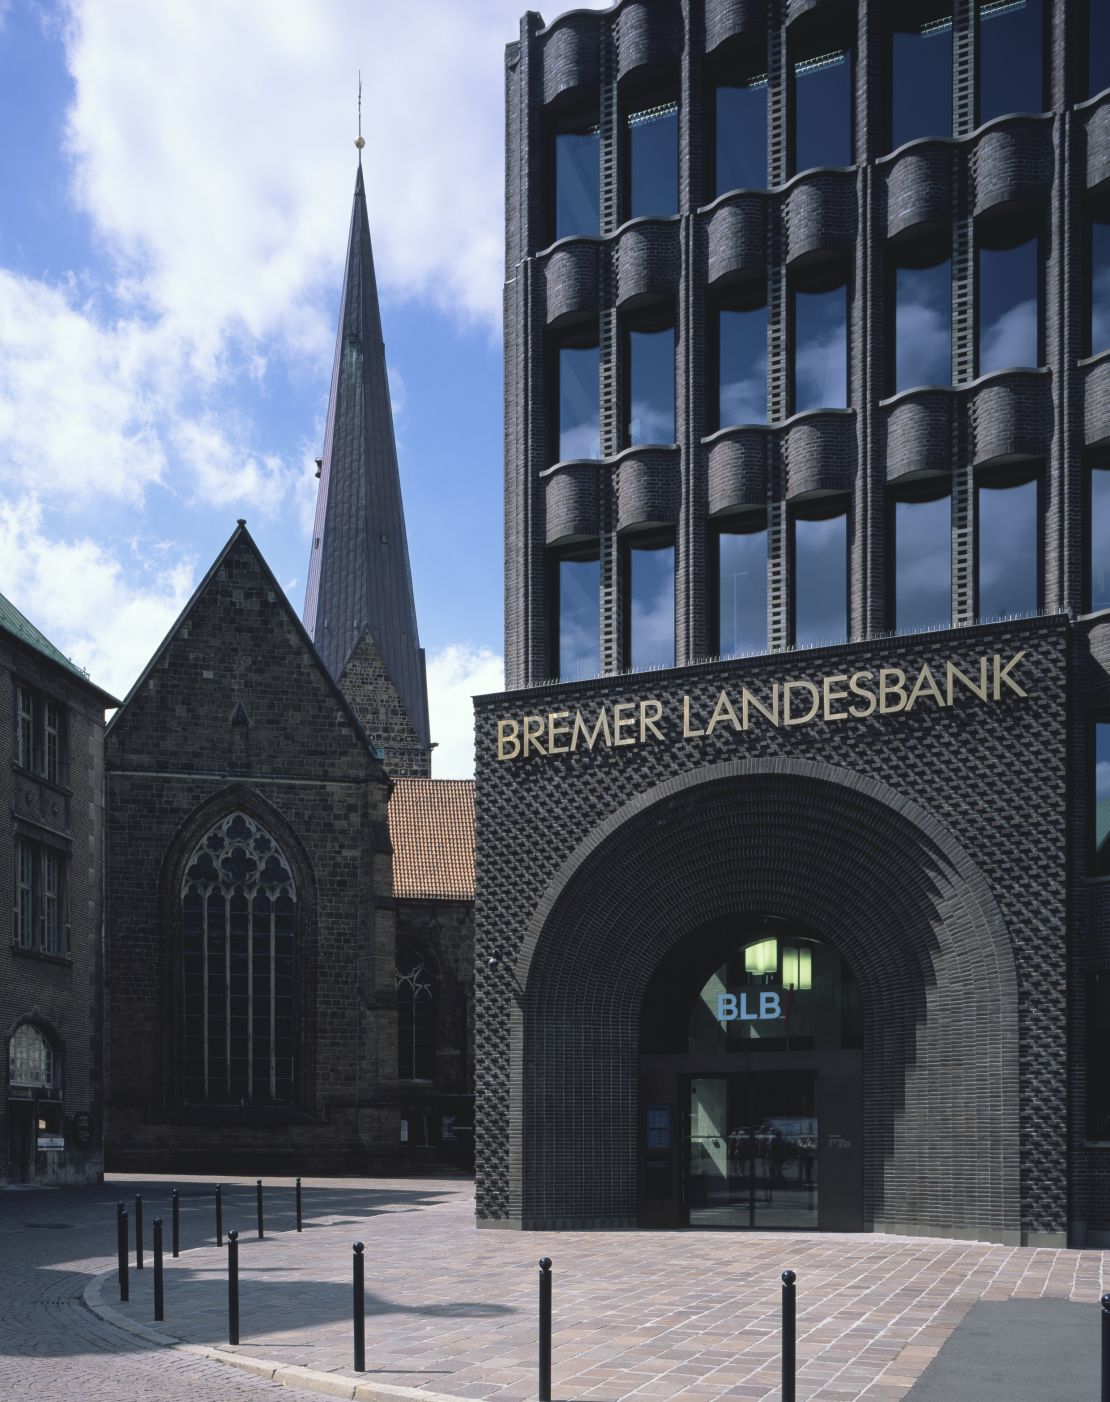 Bremer Landesbank Headquarters in Bremen, Germany